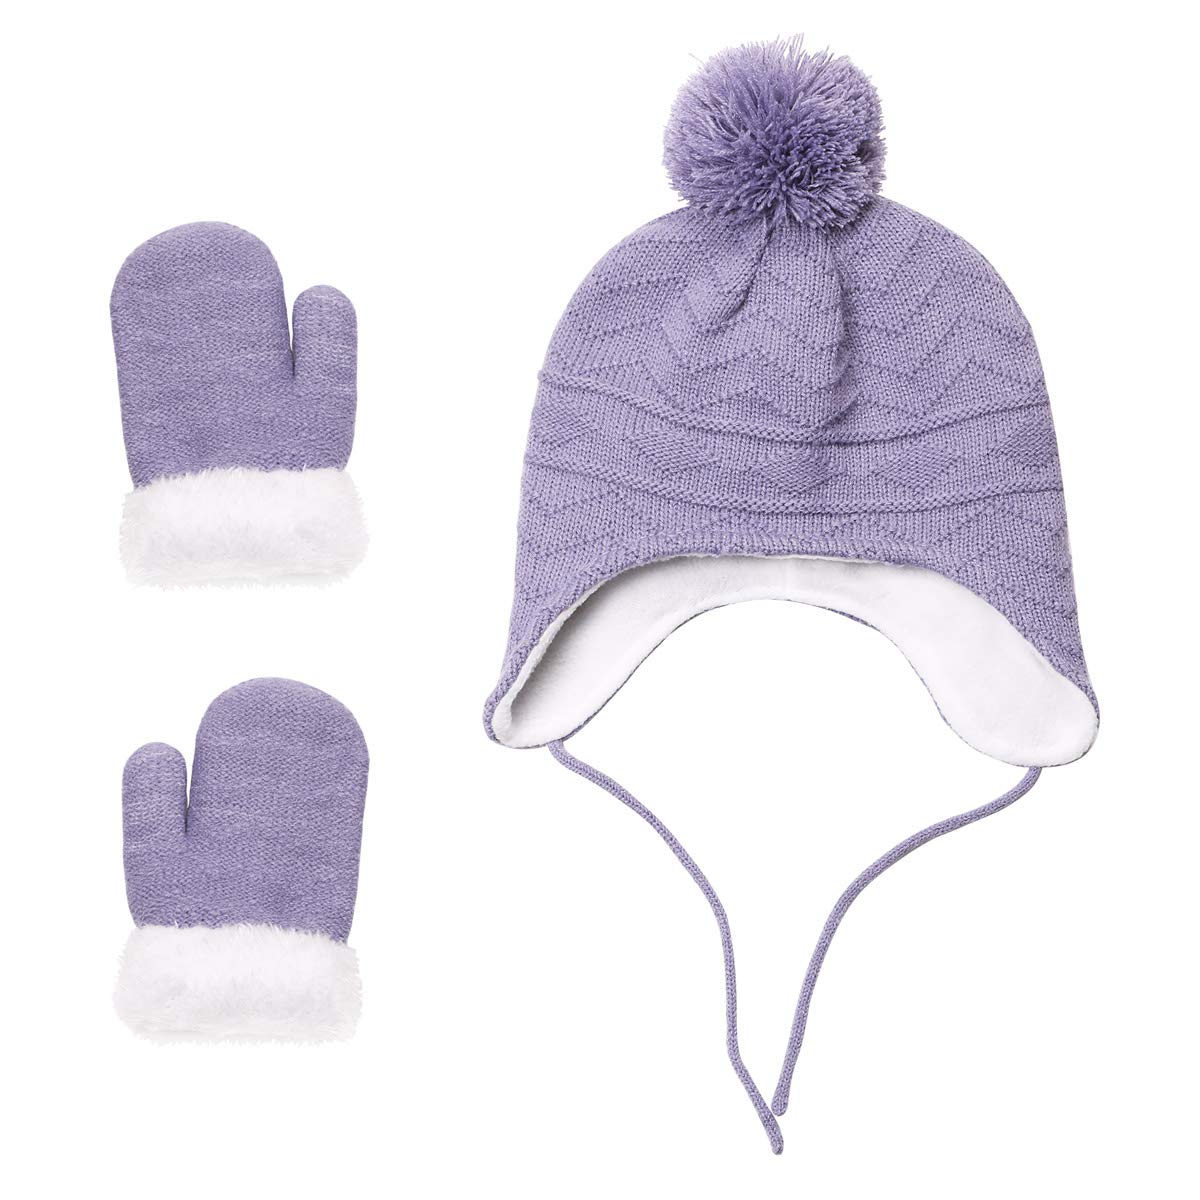 Toddler Hat and Mitten Set Girls Baby Kids Winter Hats Glove Knit Earflap Beanie Warm Fleece Cap